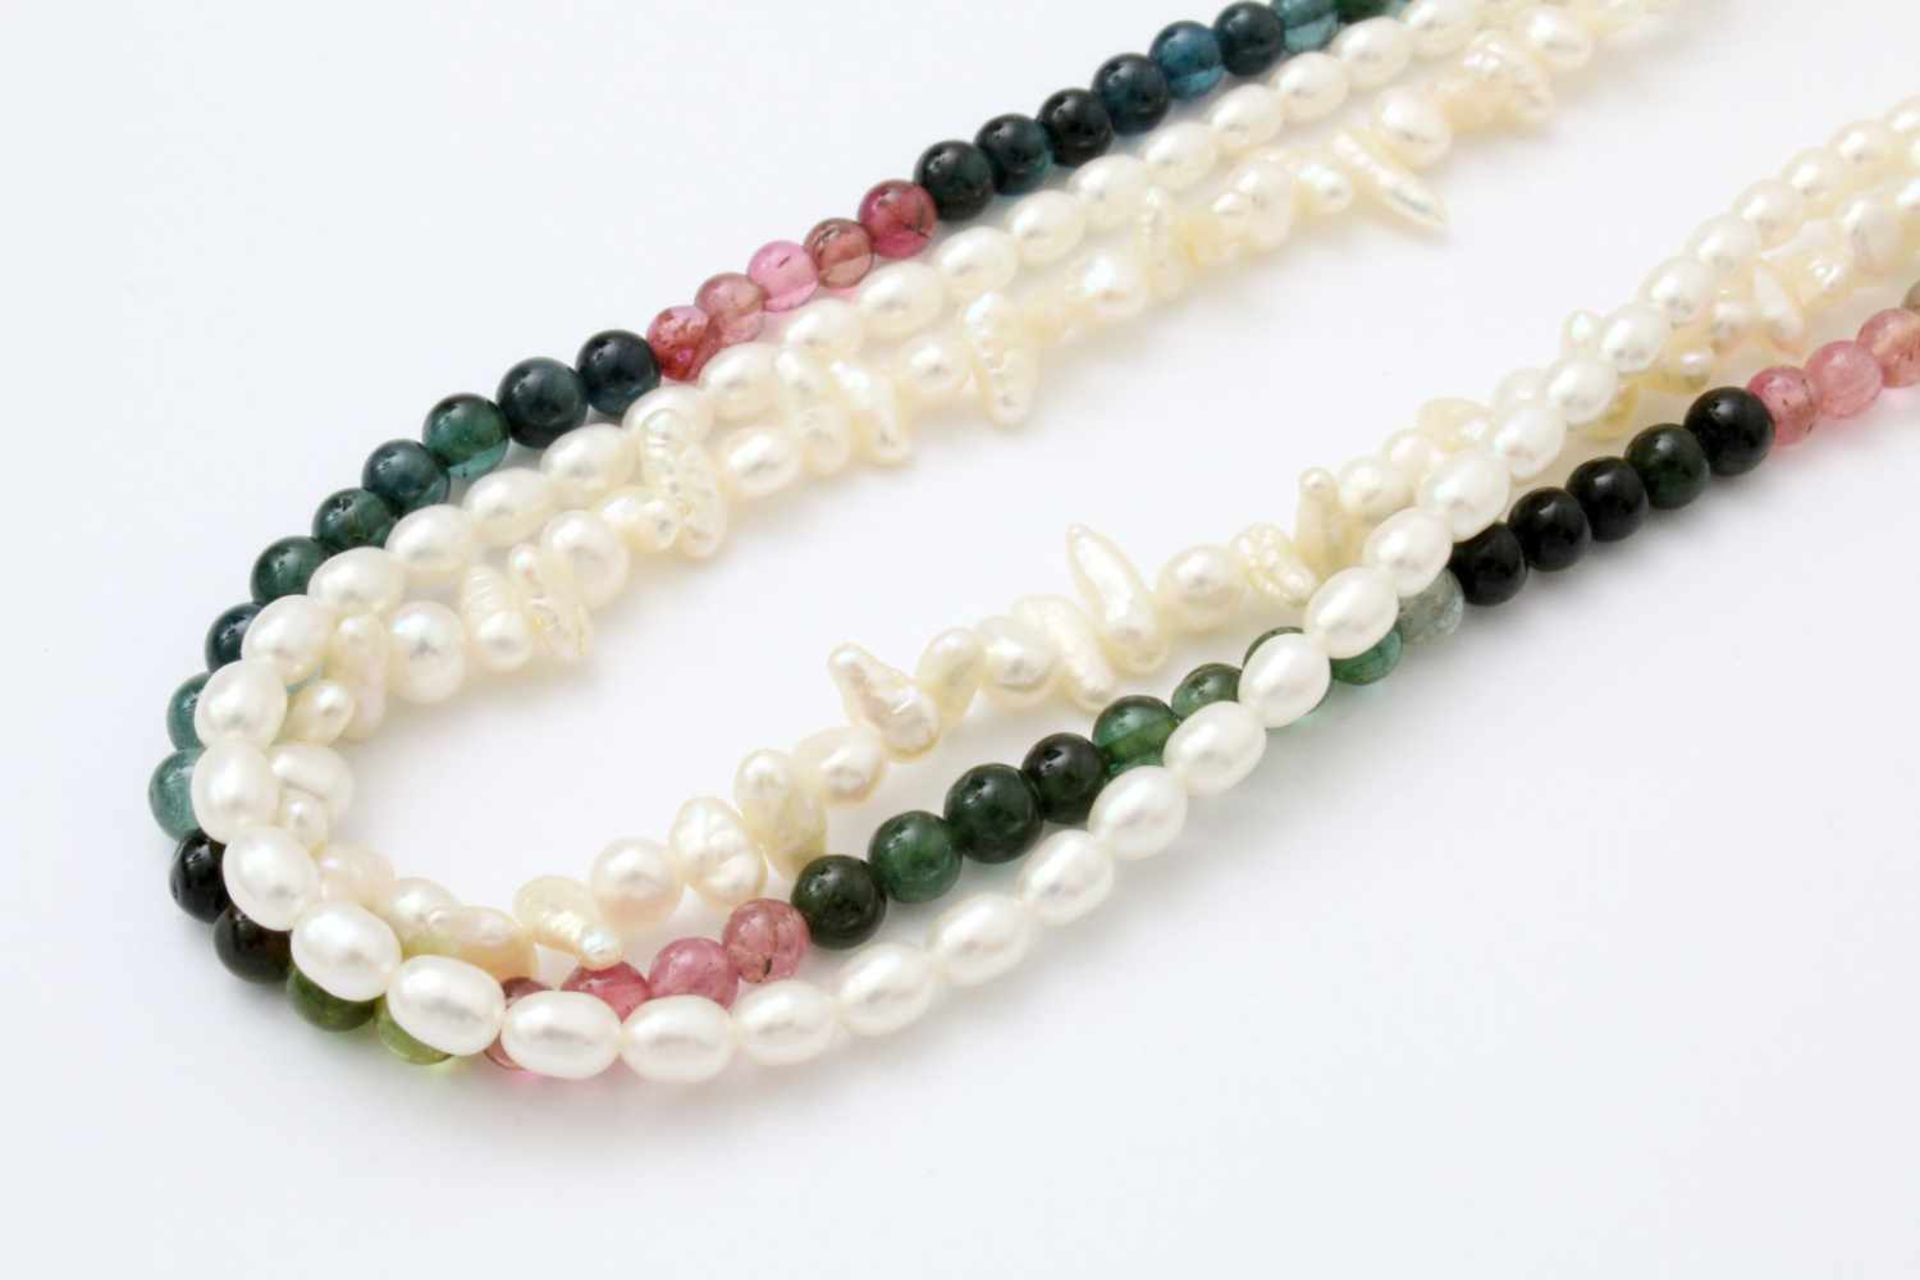 Moderne Perlenkette - Multicolor Verschluss GG 585, Kette dreireihig, ein Strang - Image 2 of 3